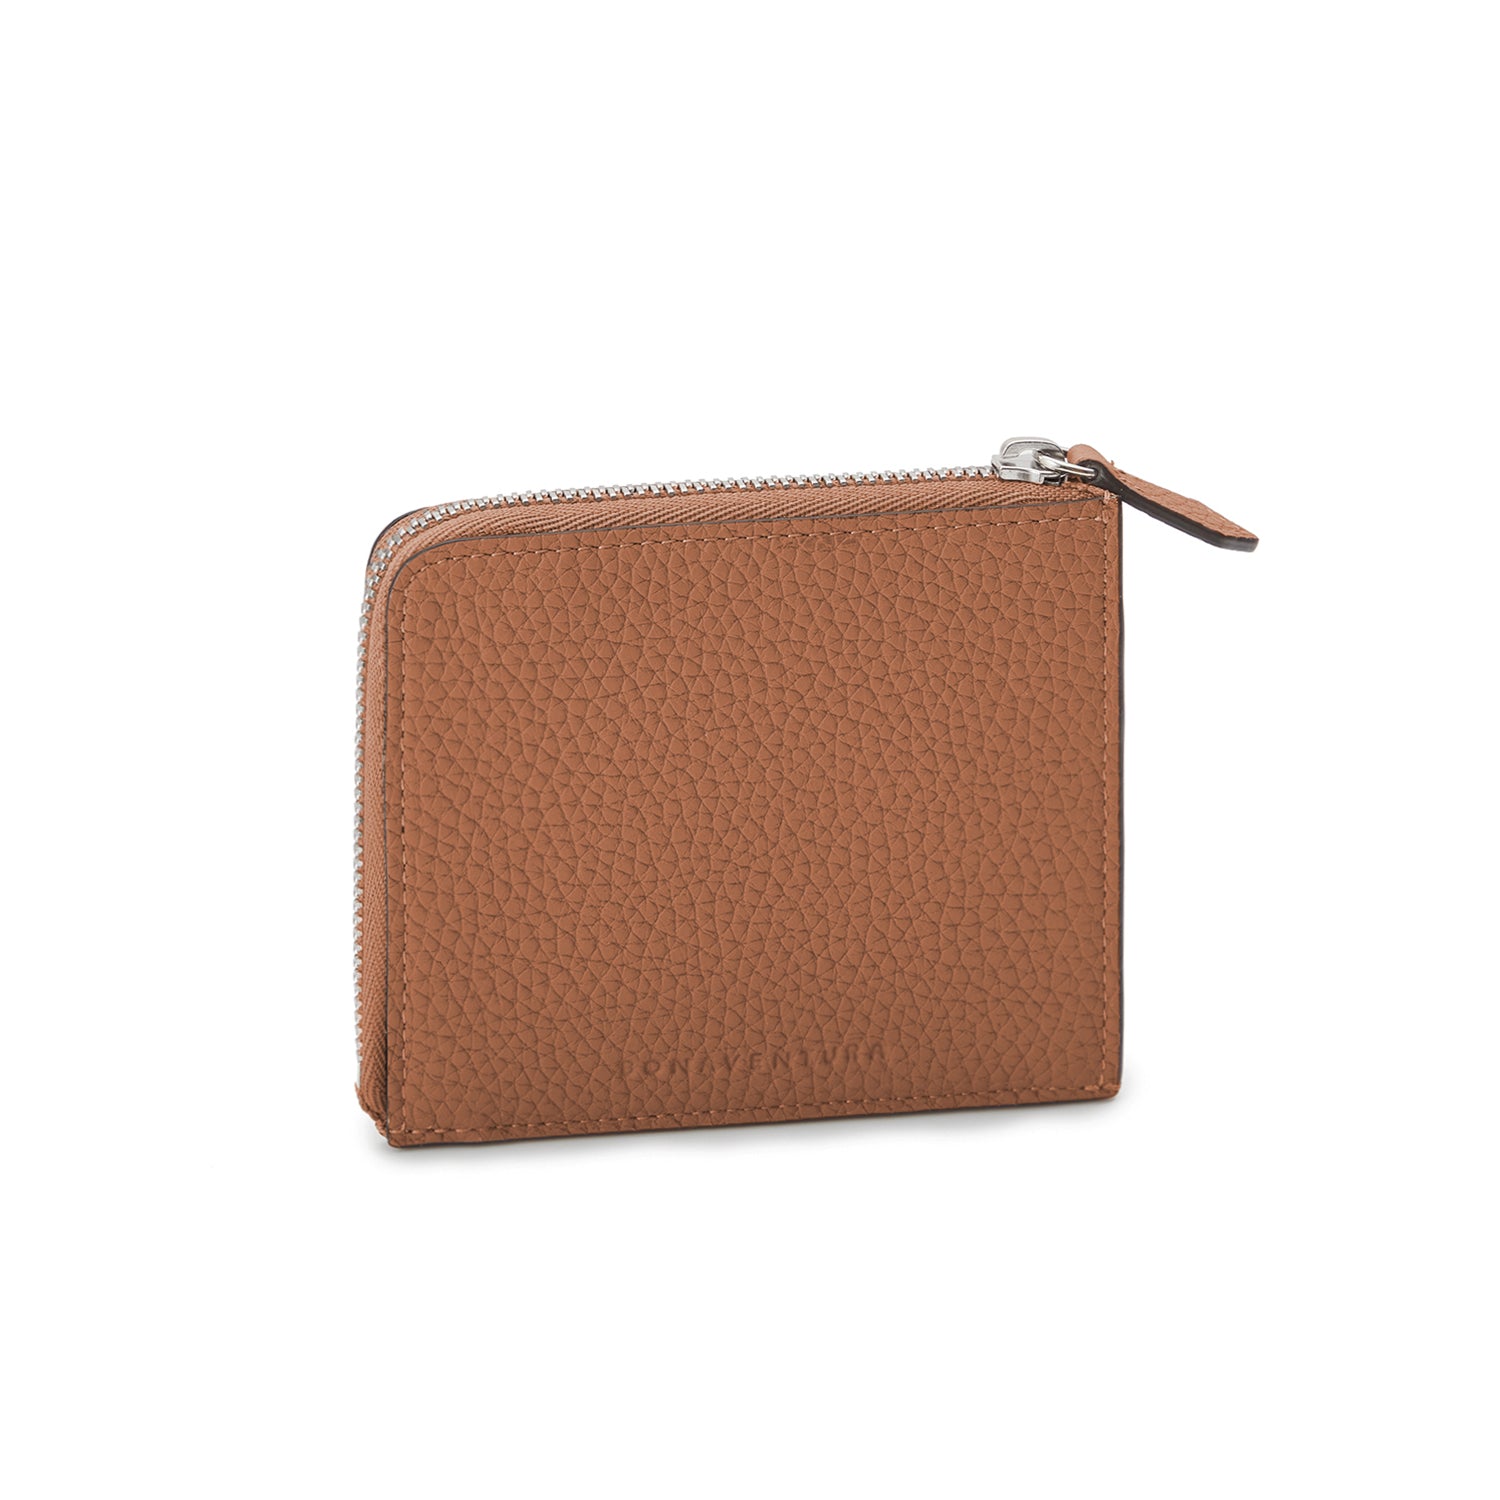 L-shaped zip wallet in shrink leather